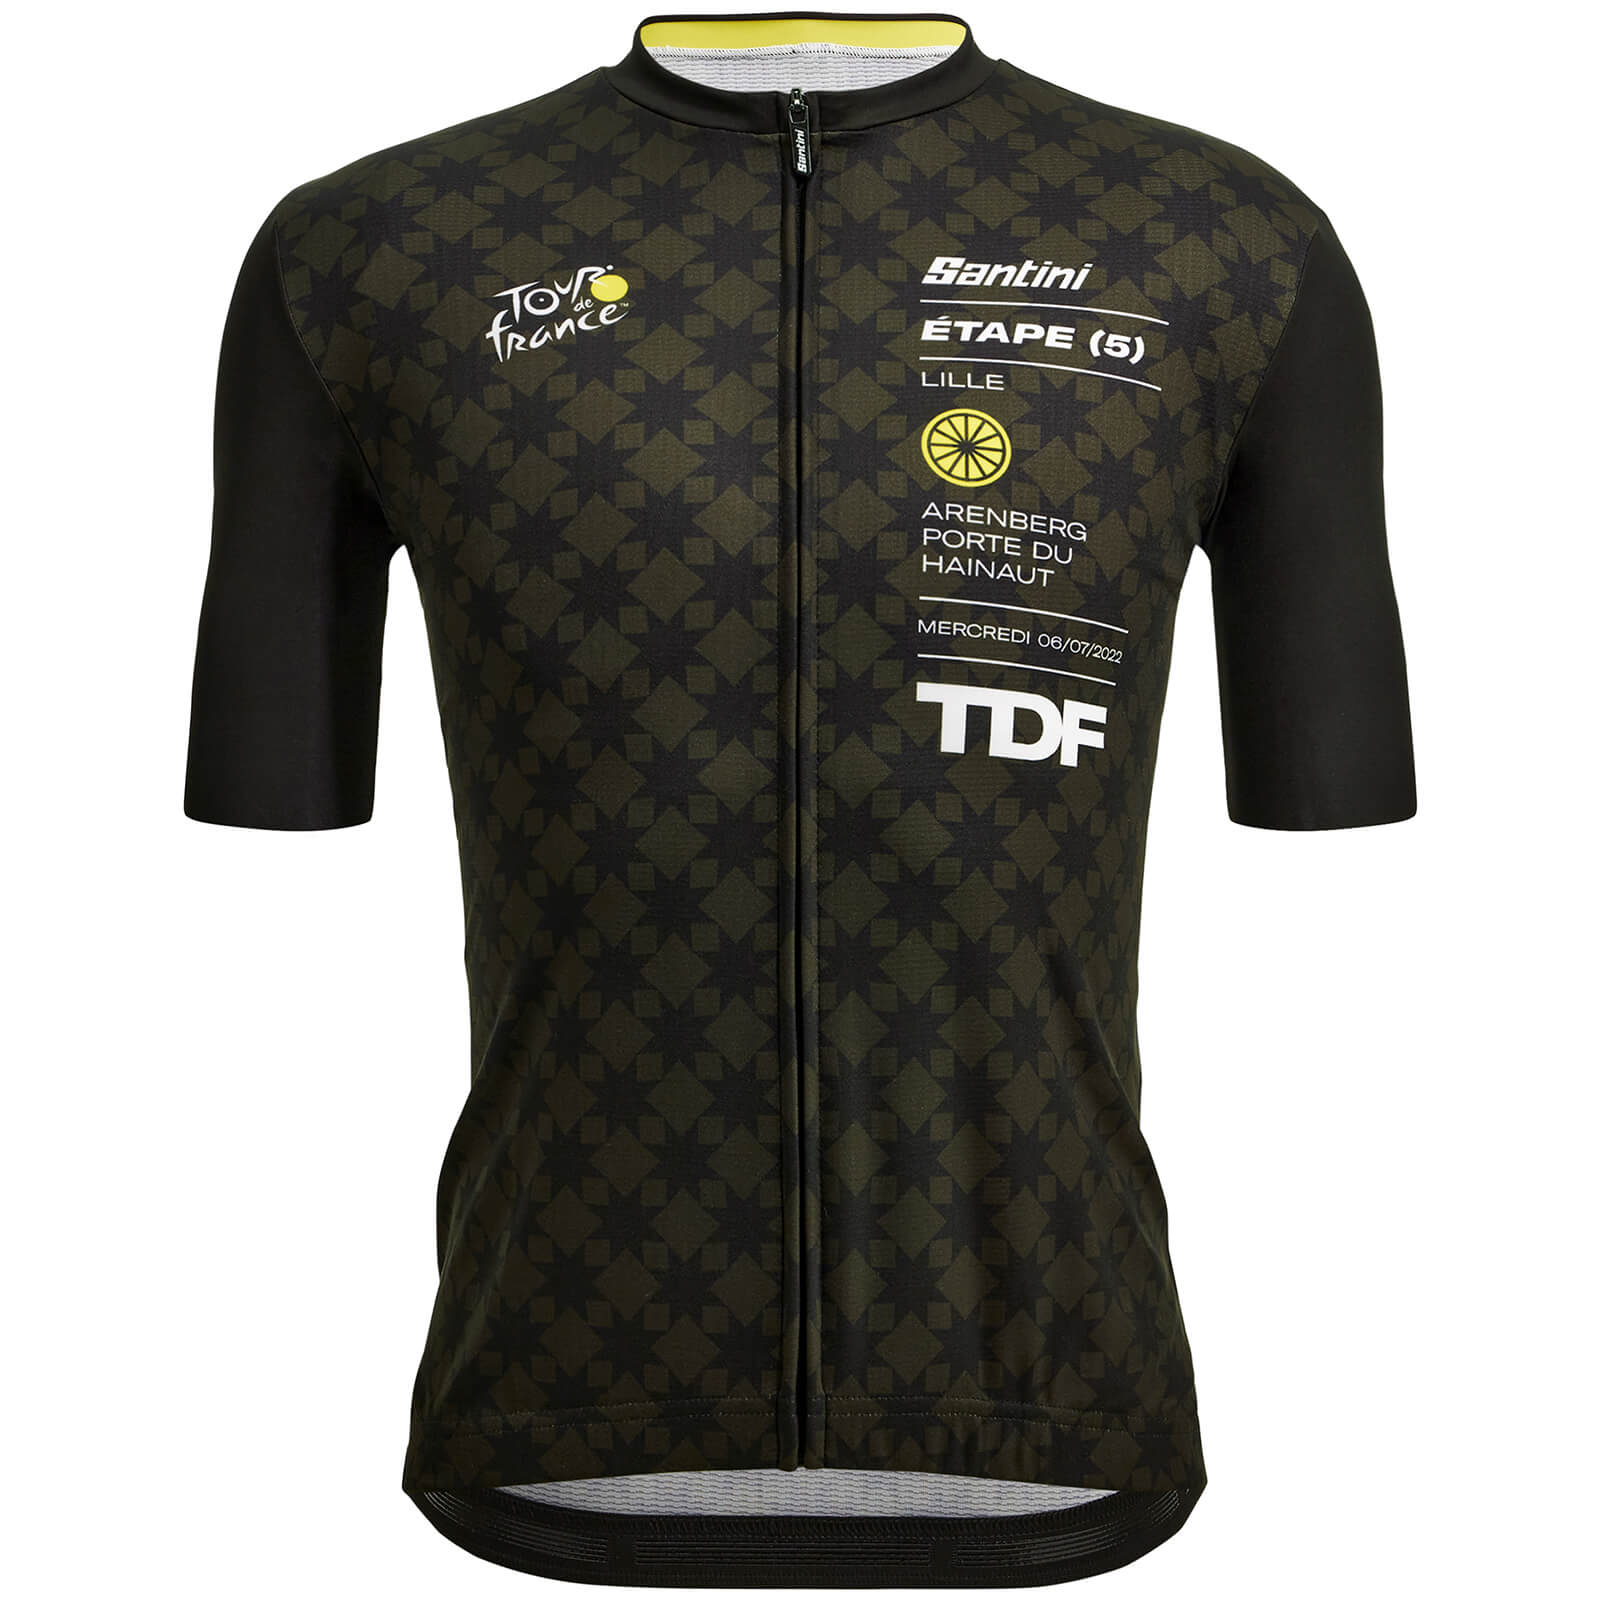 Image of Santini Tour de France Arenbreg Stage Jersey - XL